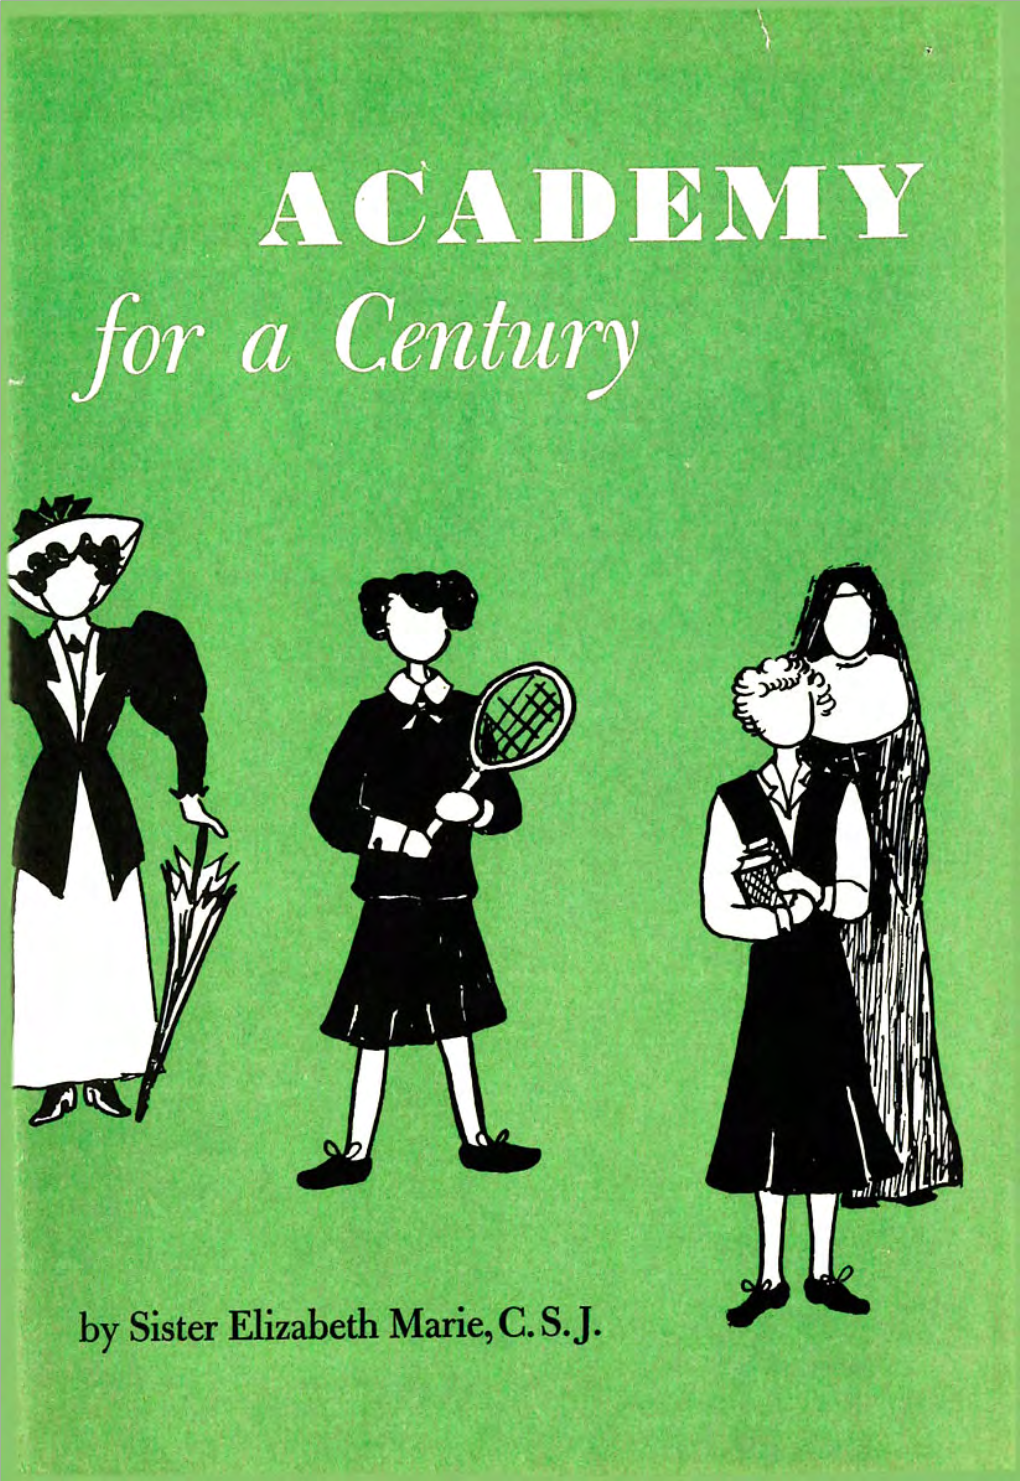 Academy for a Century © 1951